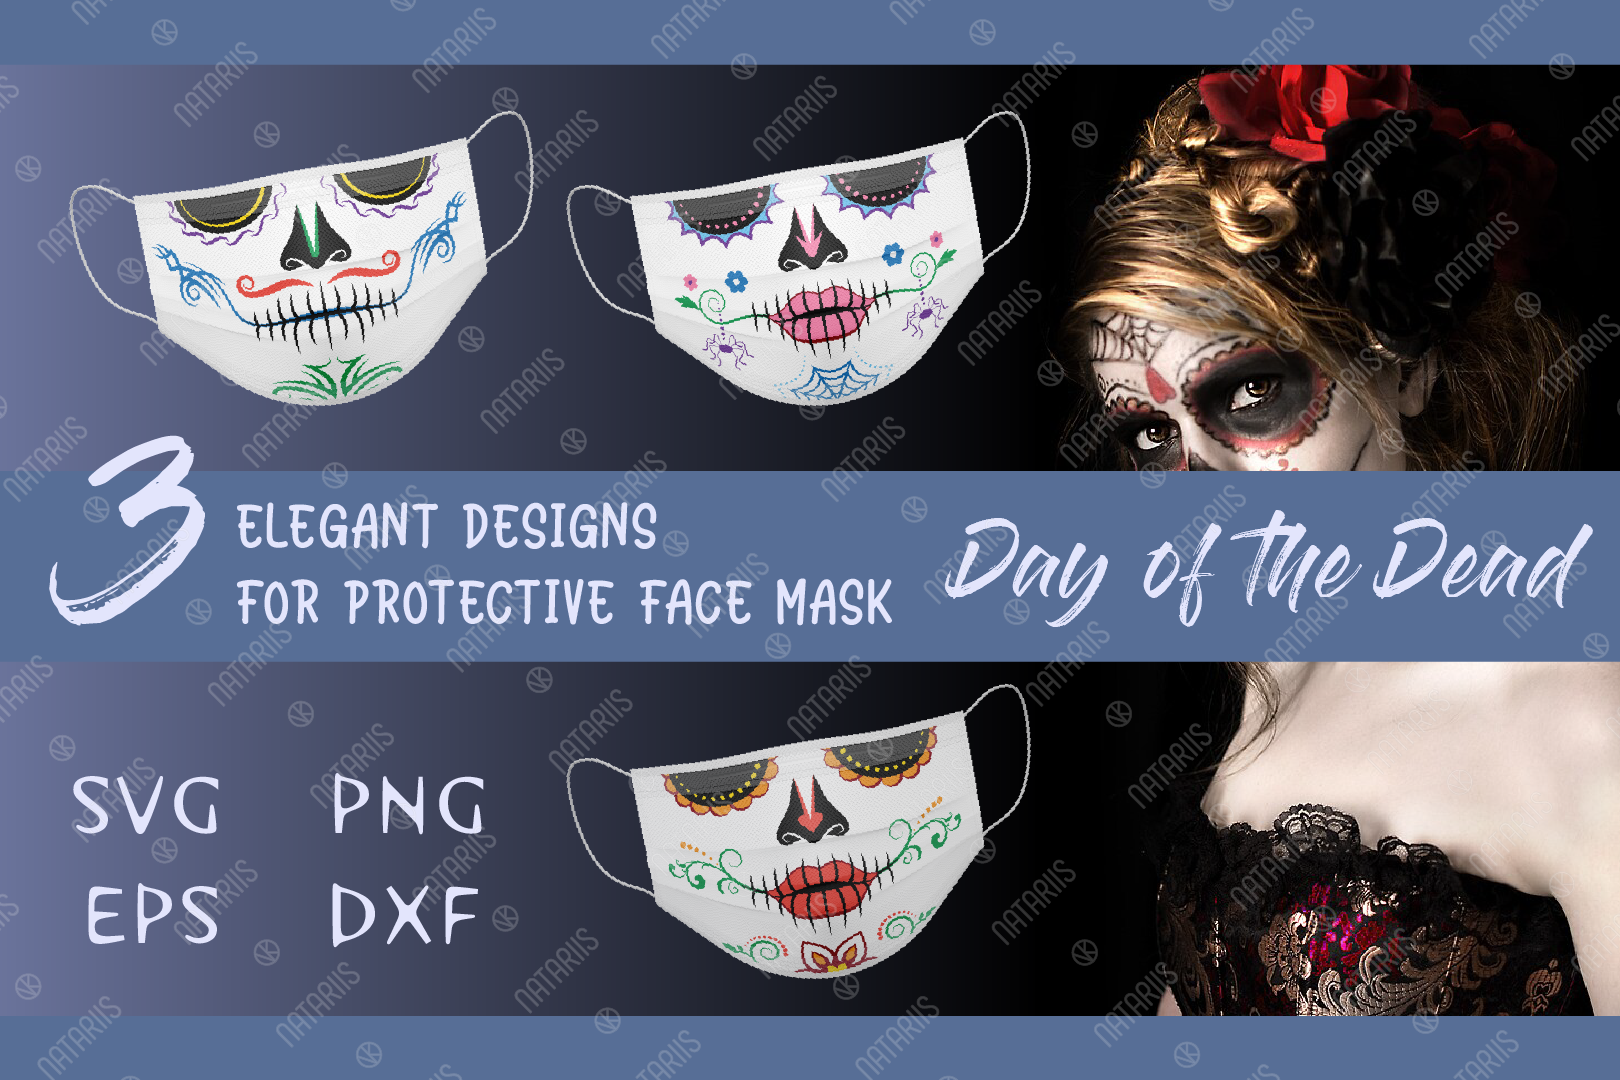 Download Svg Bundle 3 Elegant Sugar Skulls Designs For Face Mask By Natariis Studio Thehungryjpeg Com